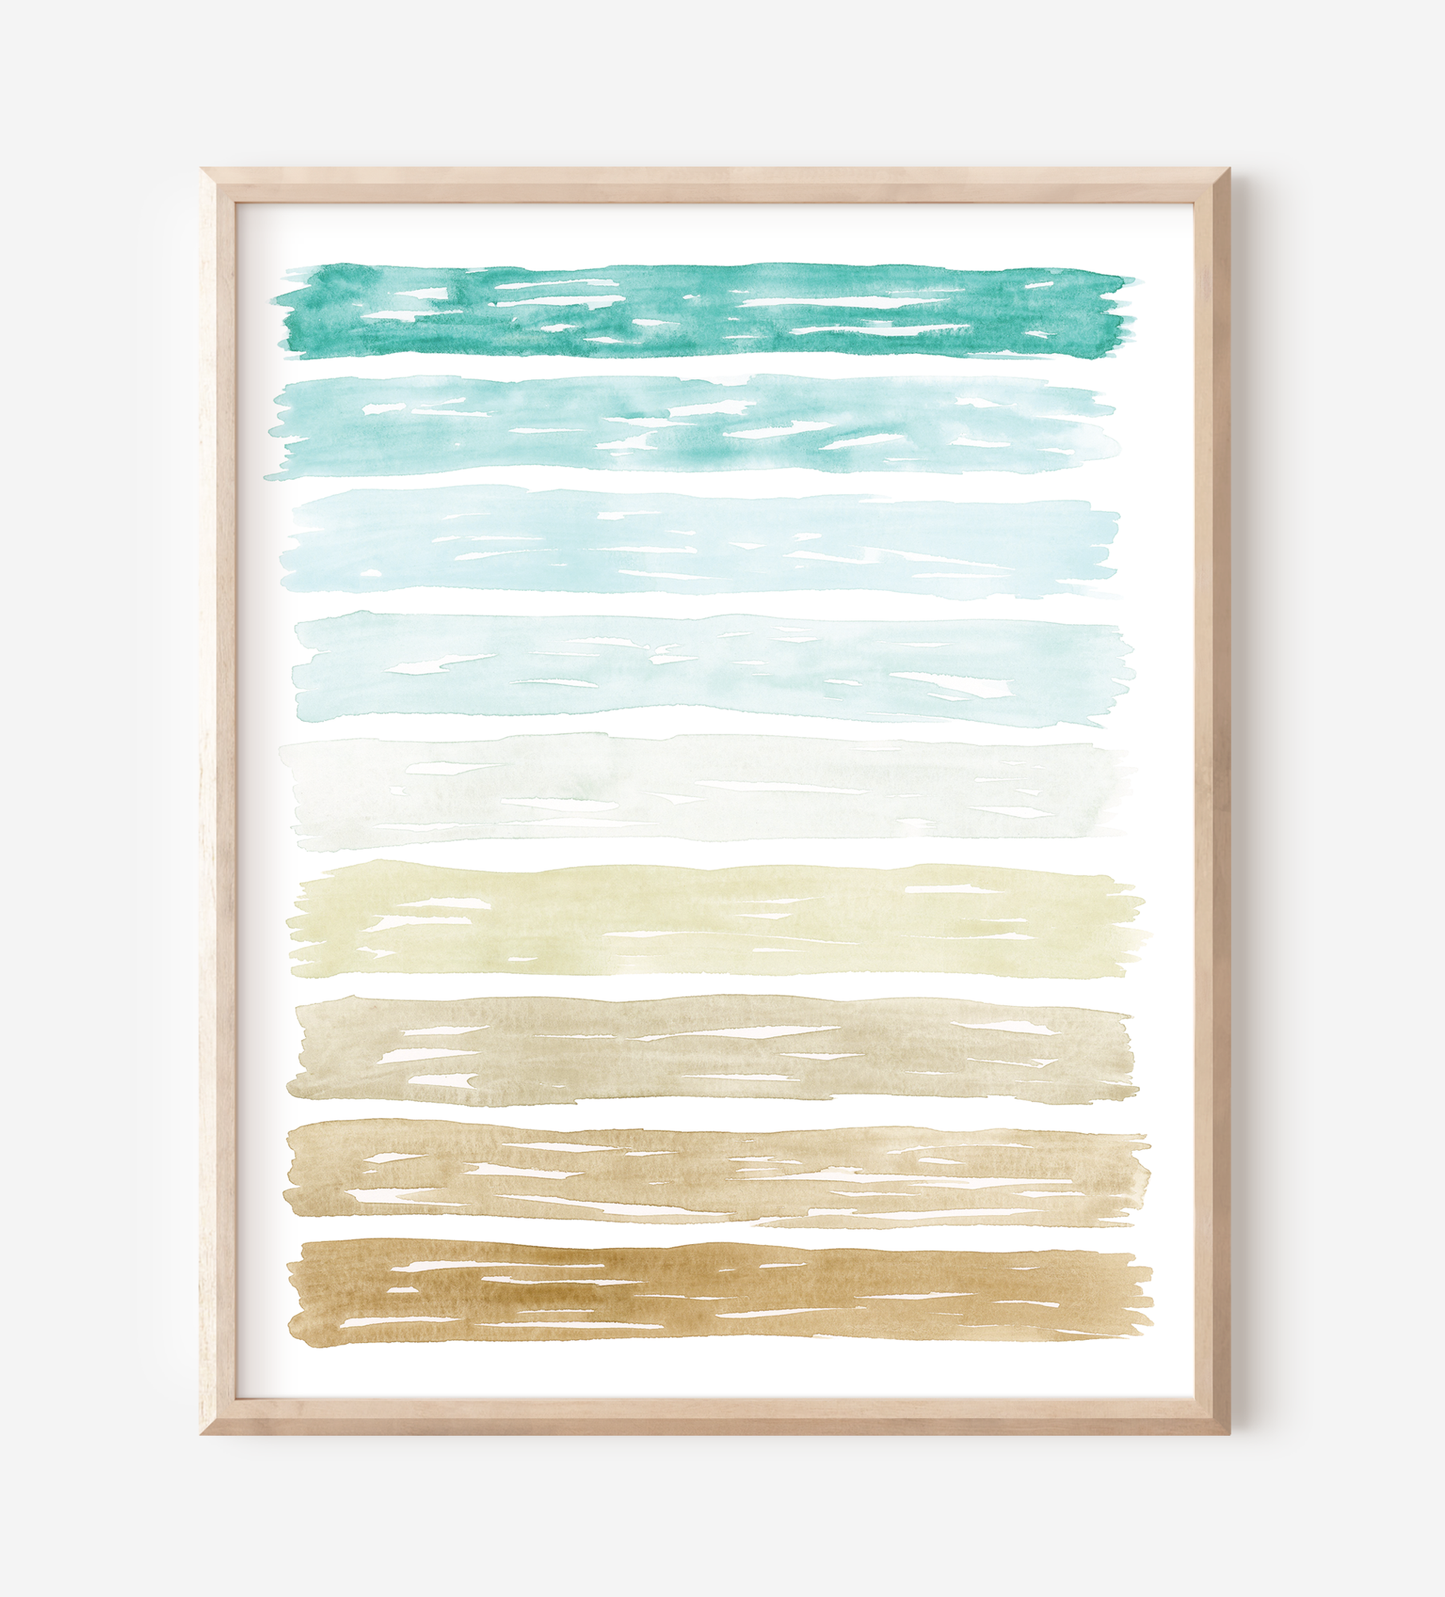 8x10 watercolor art print in wood frame colors of the ocean teal light blue brown representing sea salt and sand